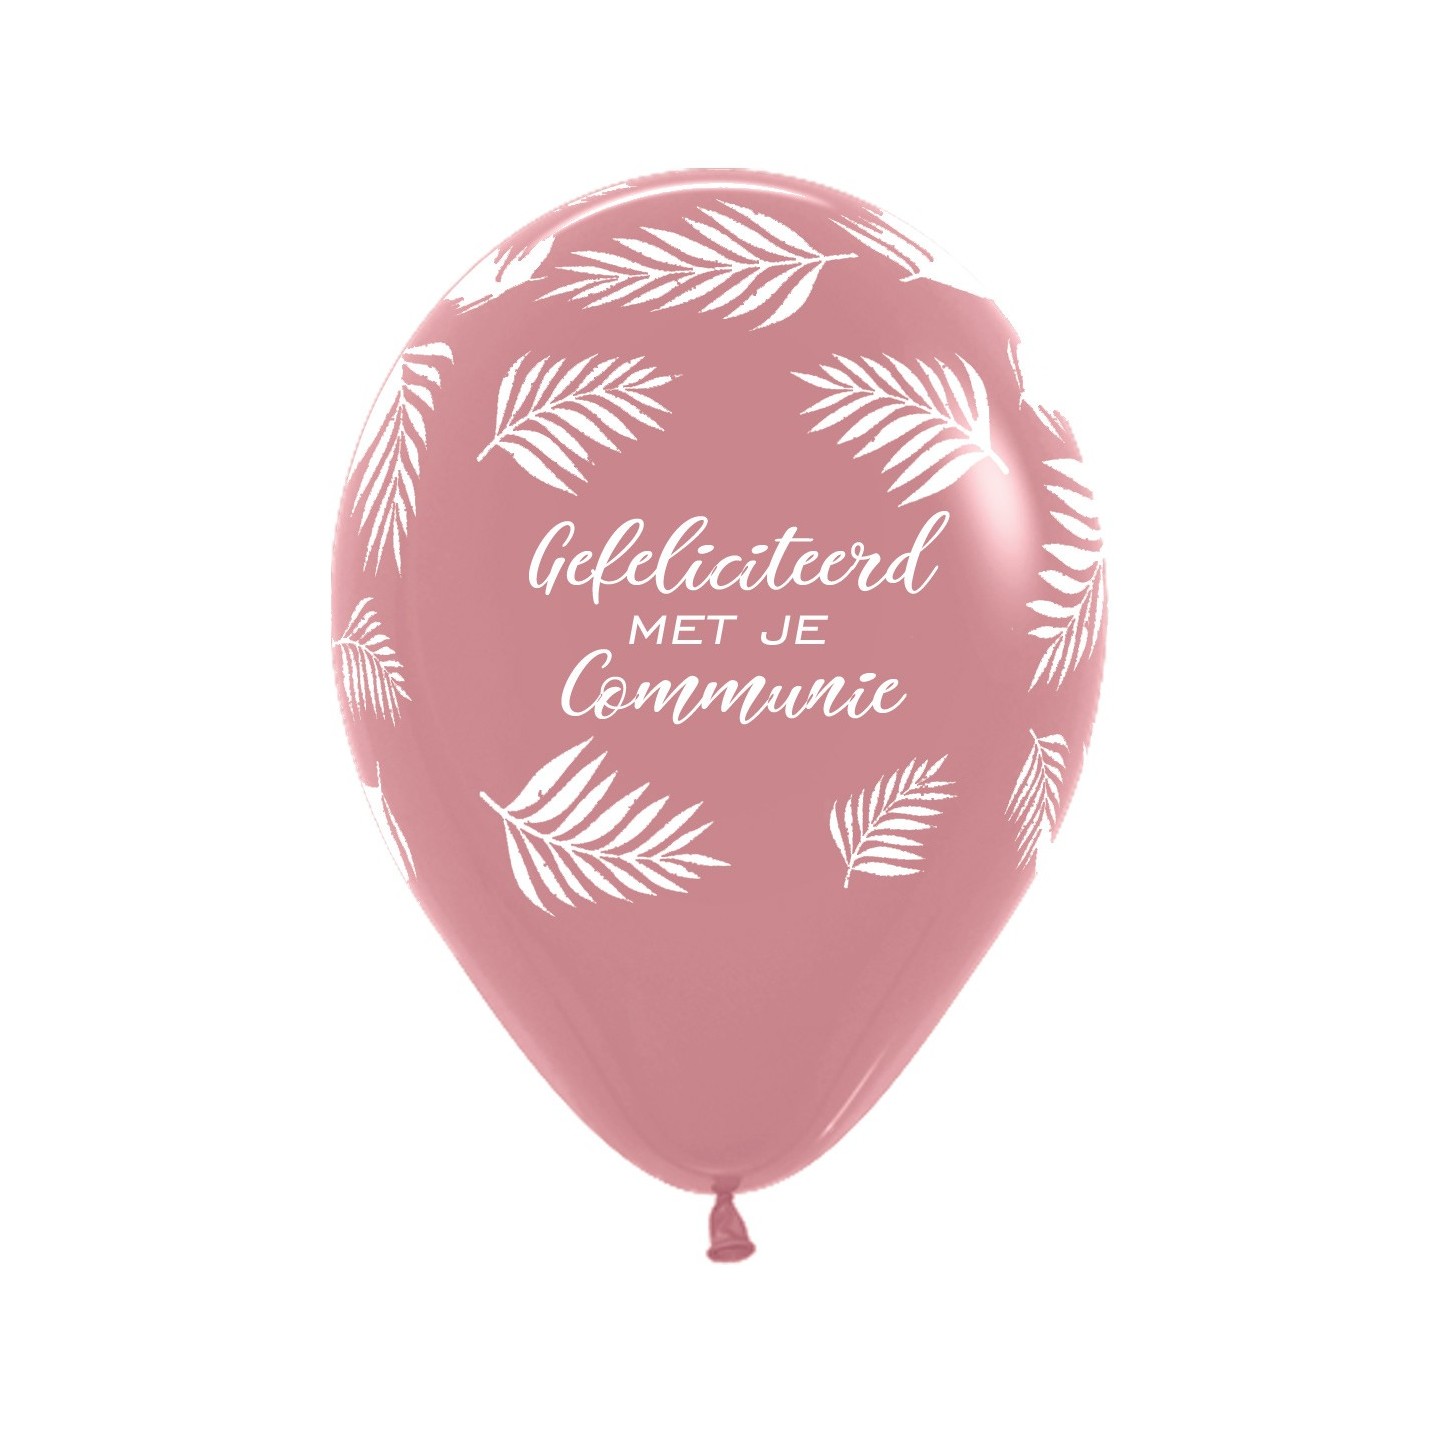 Communie ballonnen rosewood roze versiering